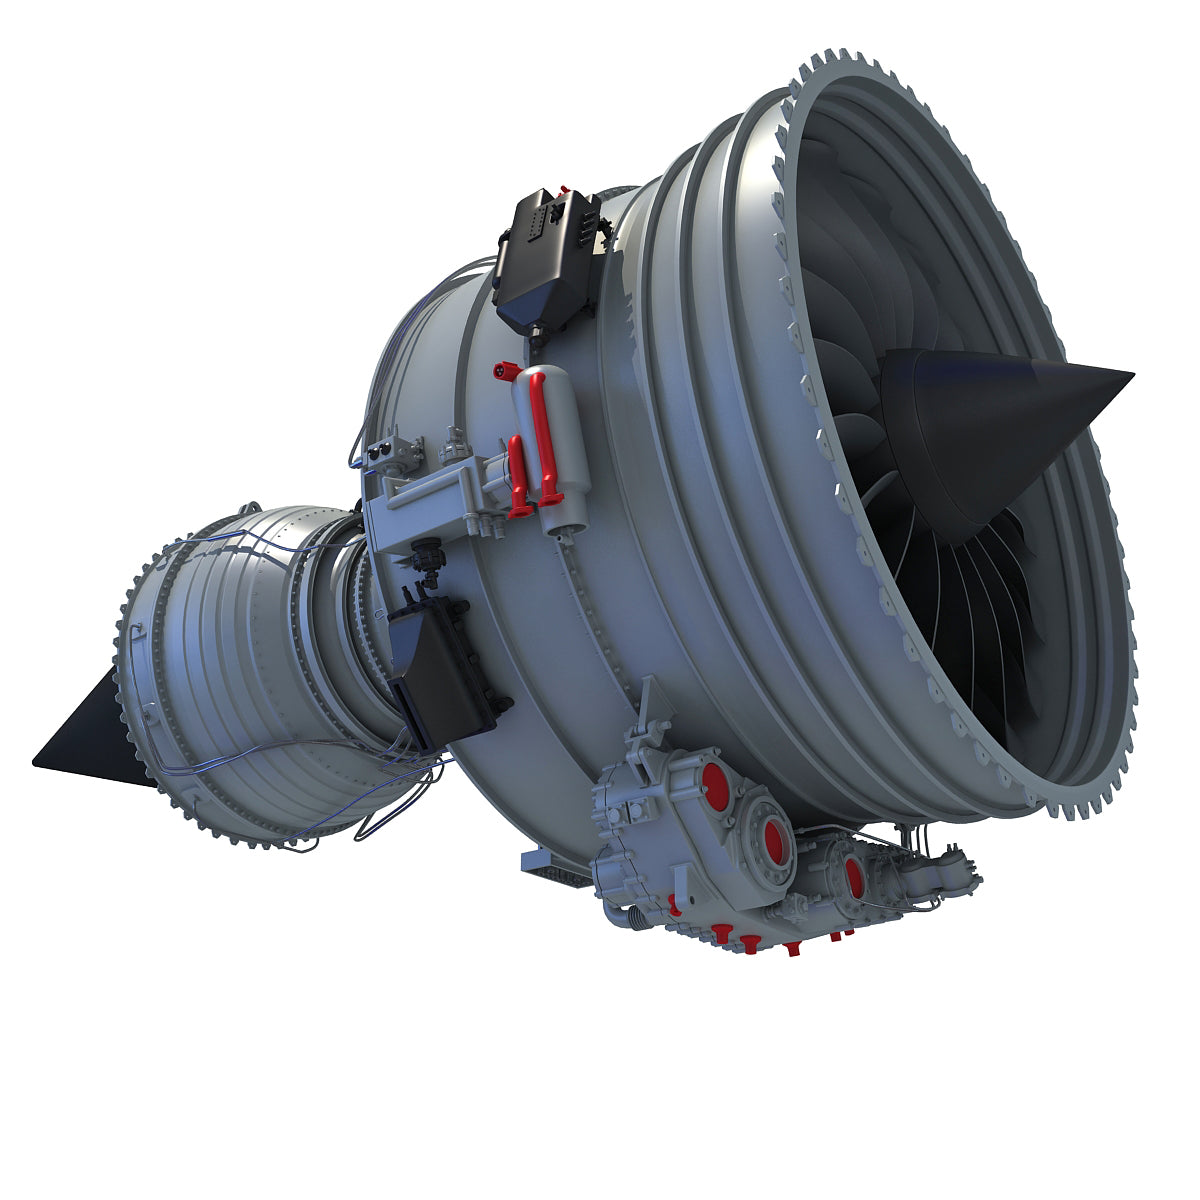 3D Aircraft Jet Turbofan Engine Model